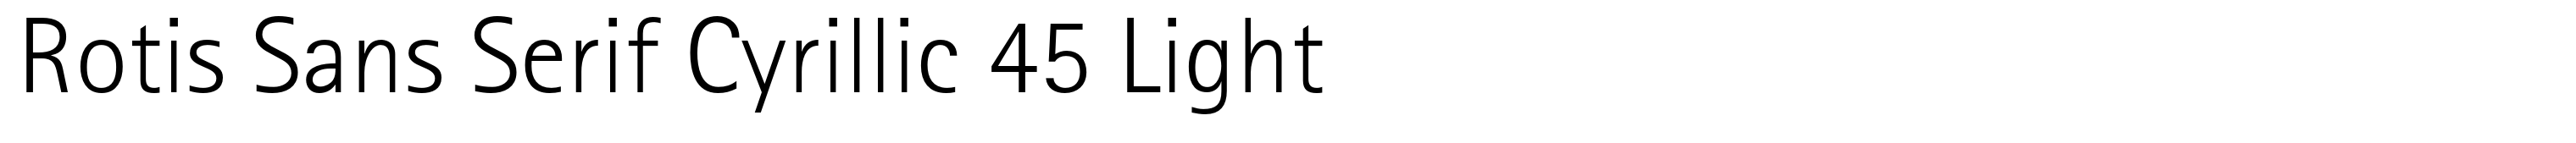 Rotis Sans Serif Cyrillic 45 Light